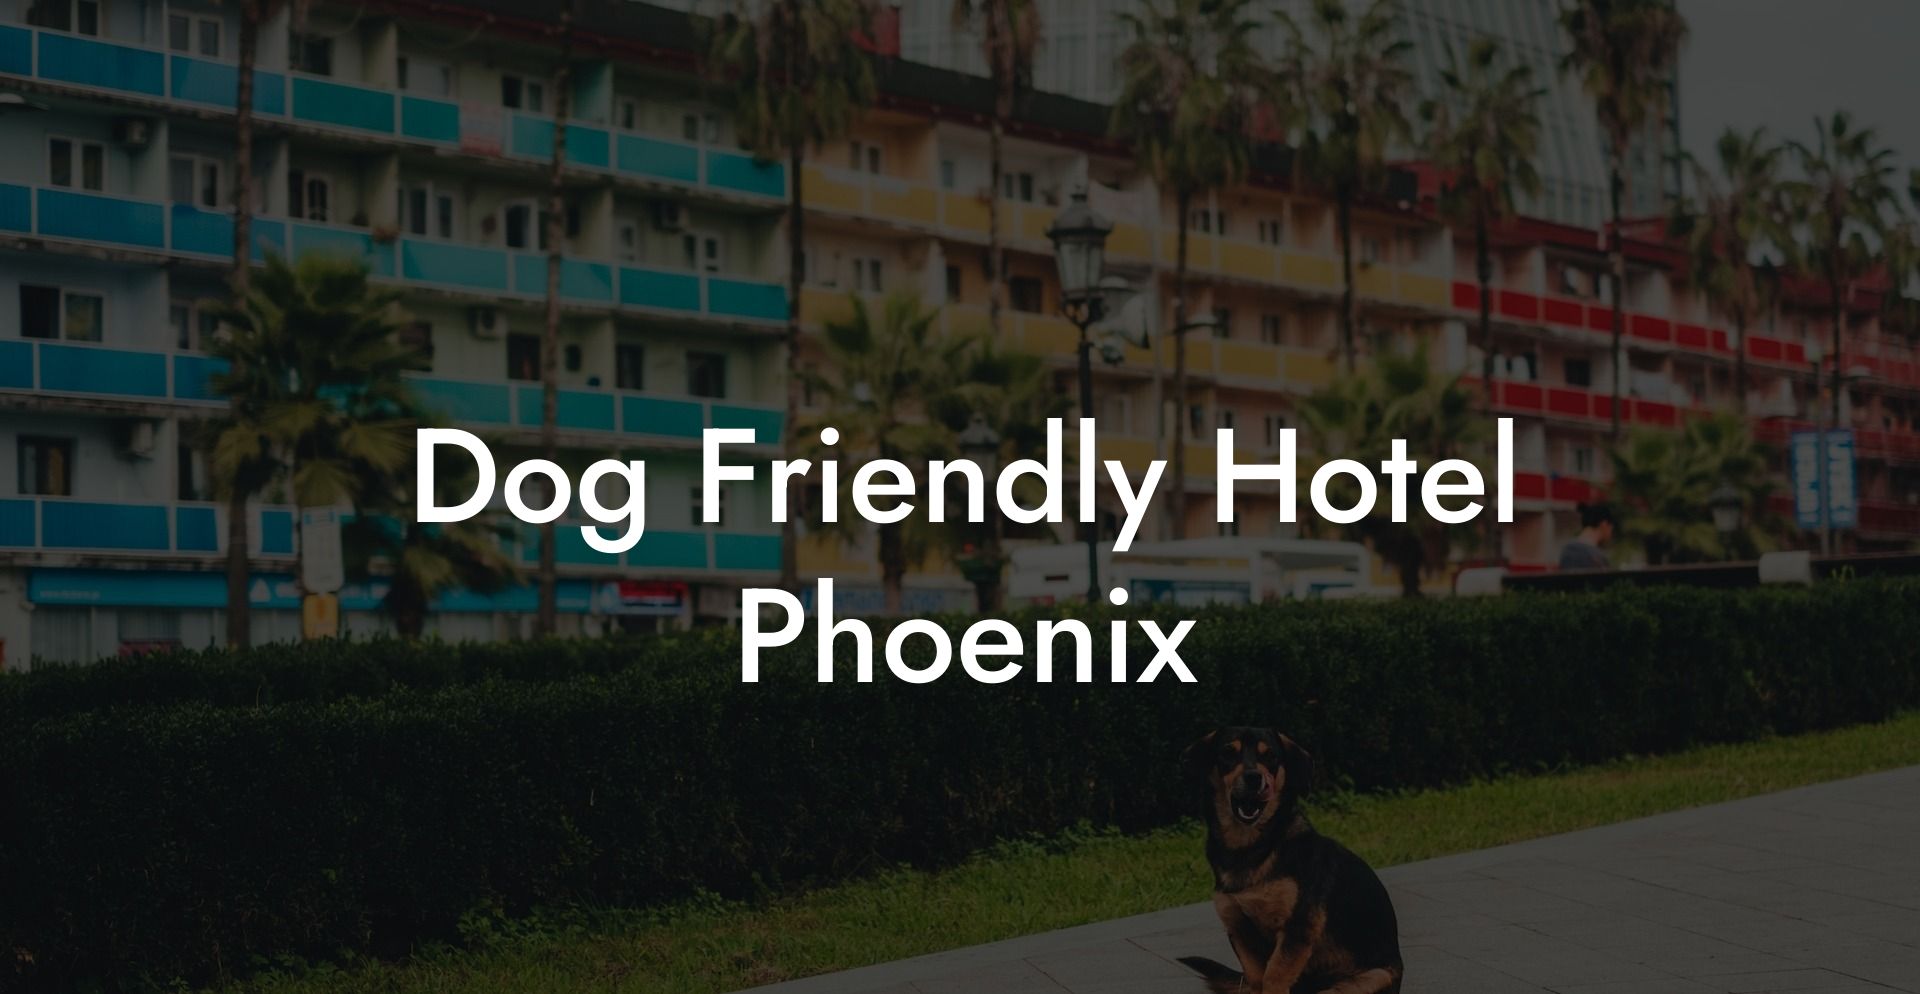 Dog Friendly Hotel Phoenix